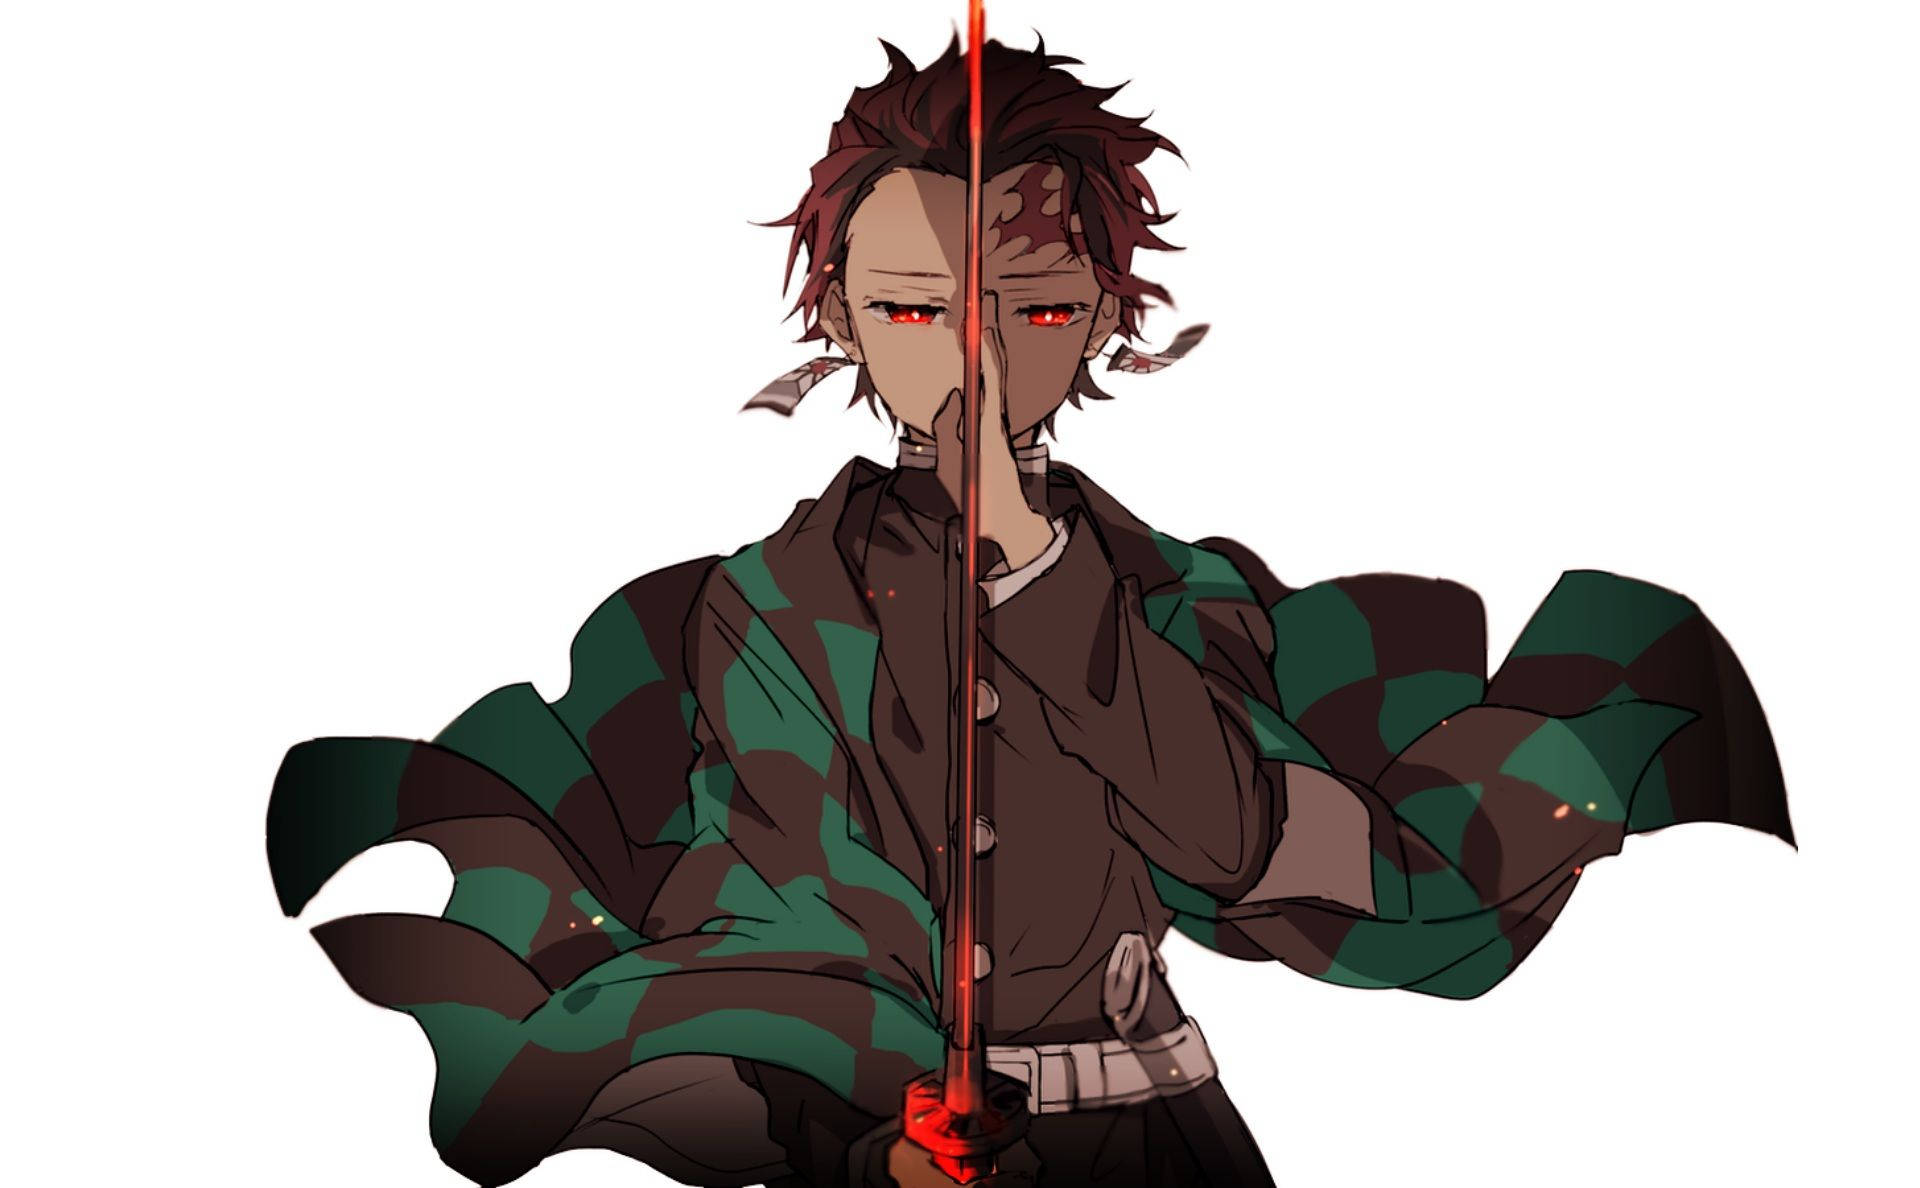 Demon Slayer Kamado Tanjiro with red eyes wearing Hanafuda earrings and checkered green and black coat holding his crimson and black sword.  